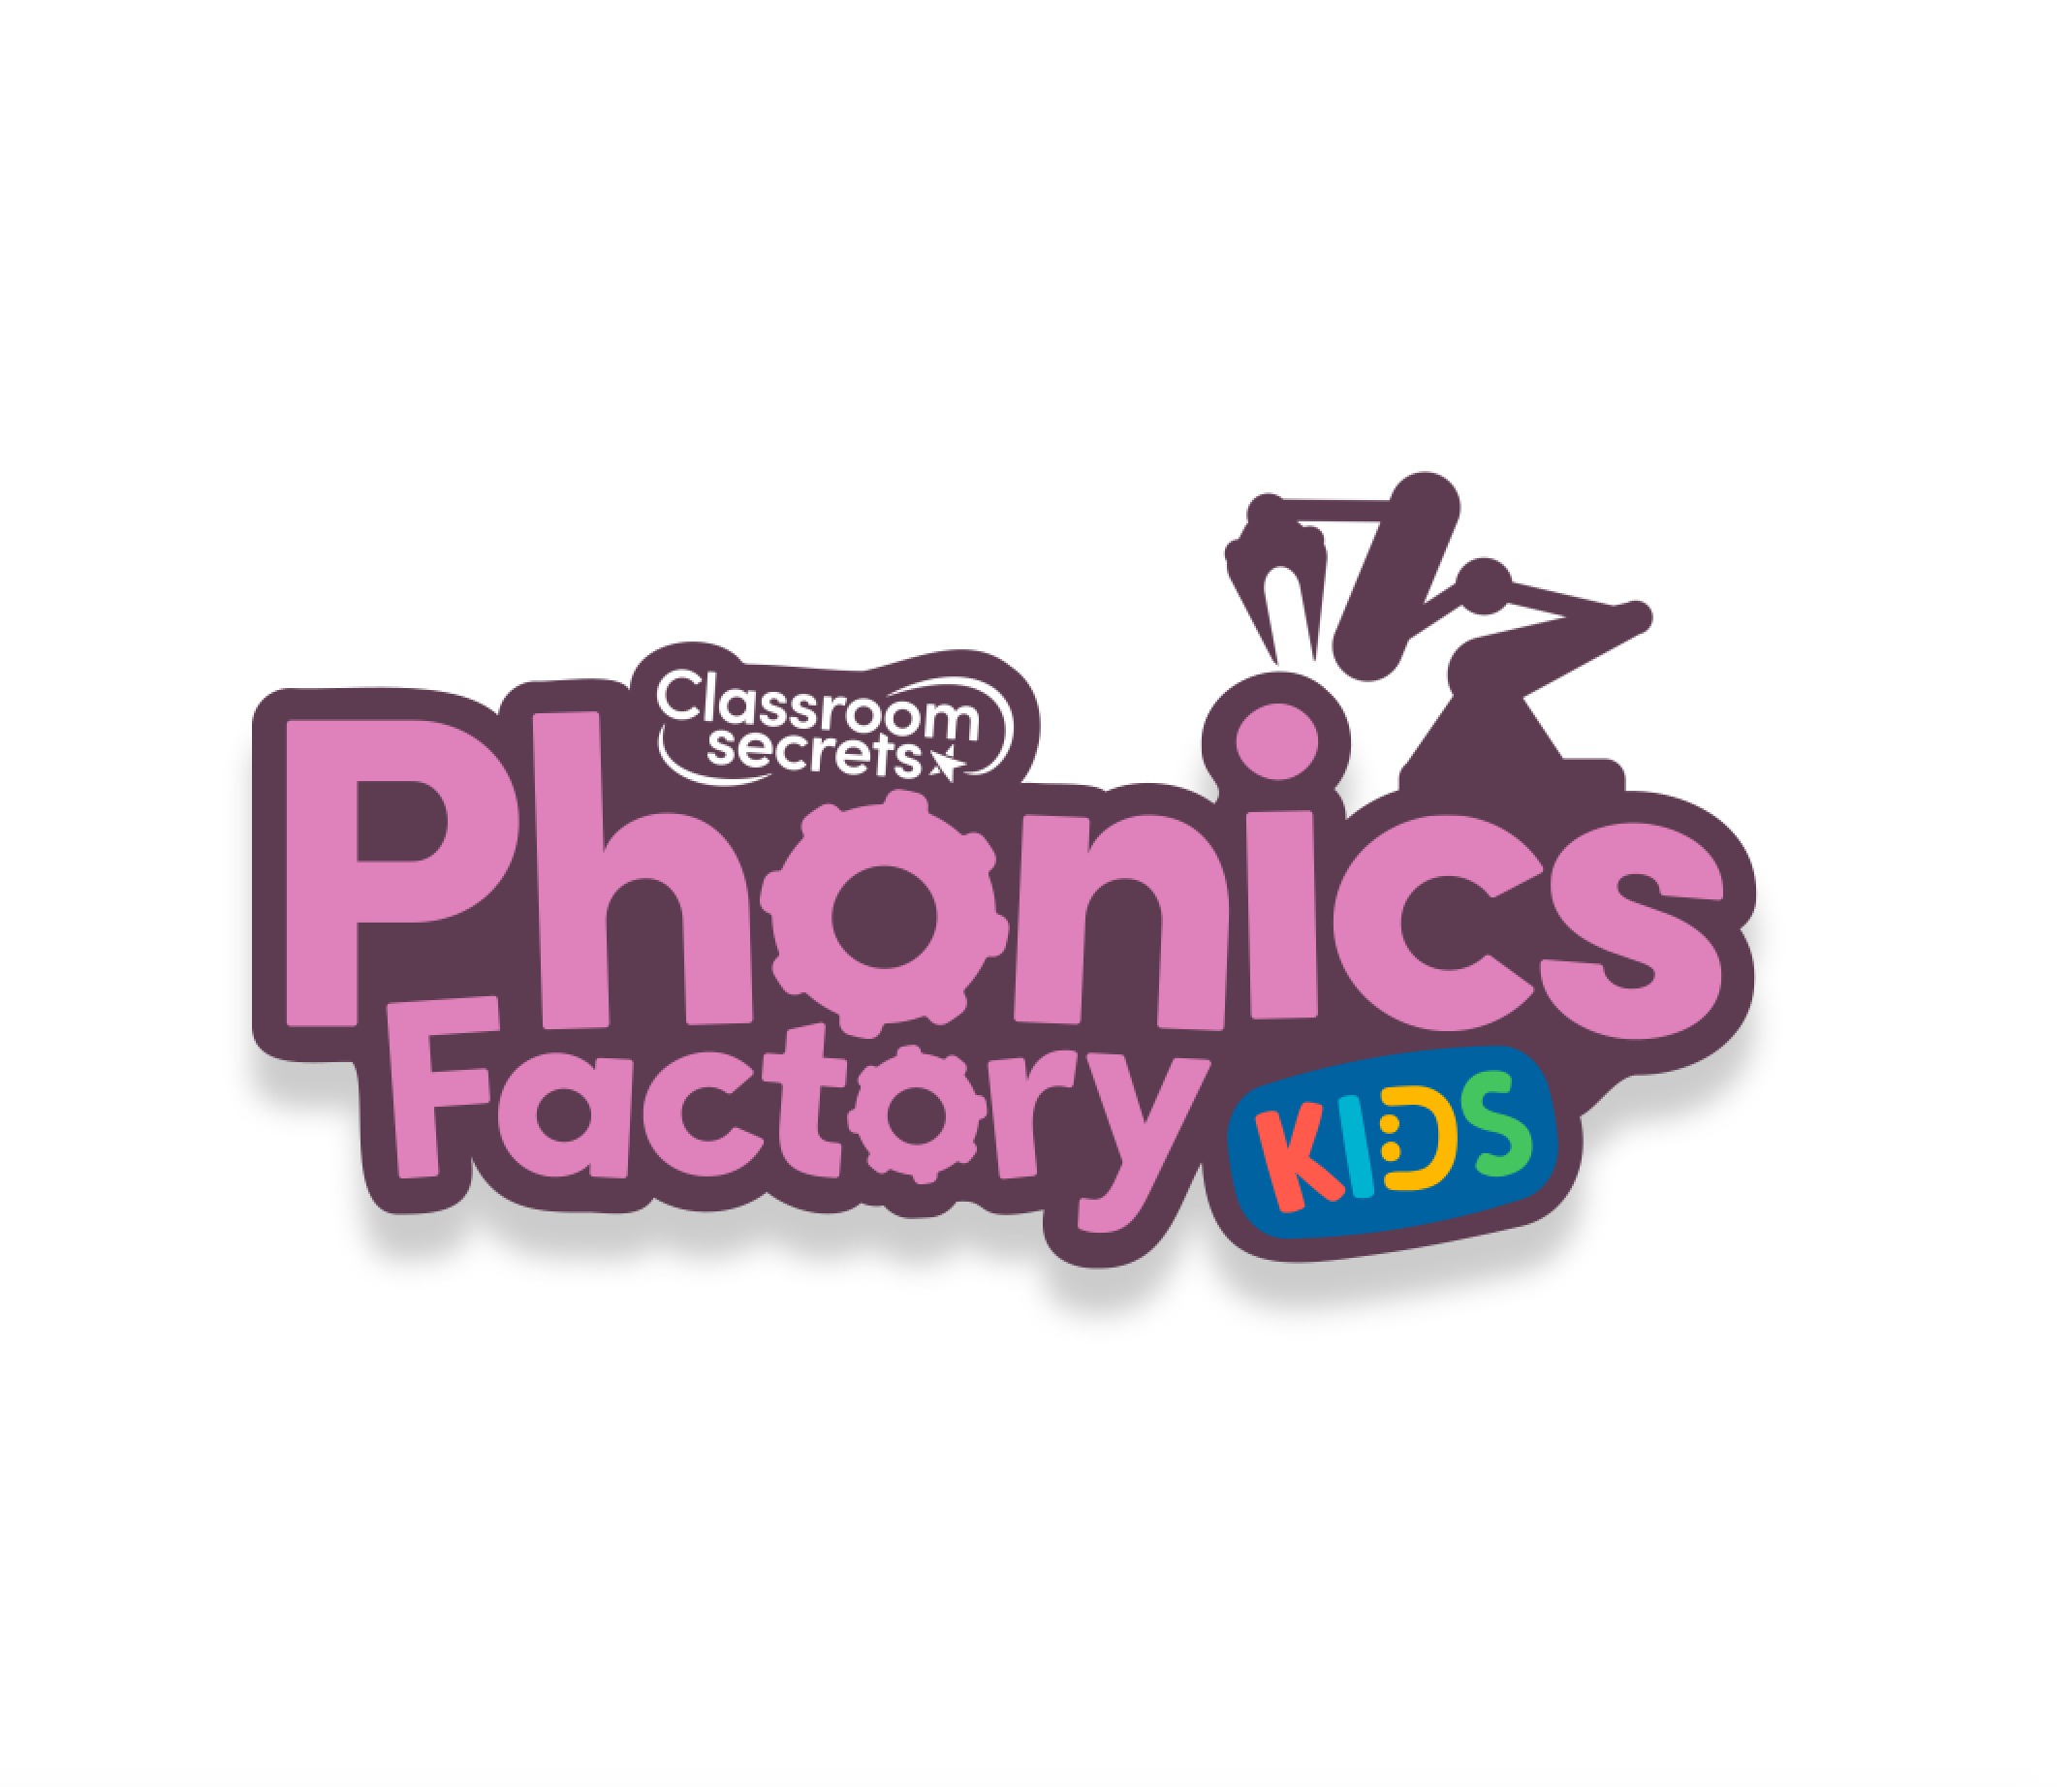 Classroom Secrets Kids Presents: the Phonics Factory!